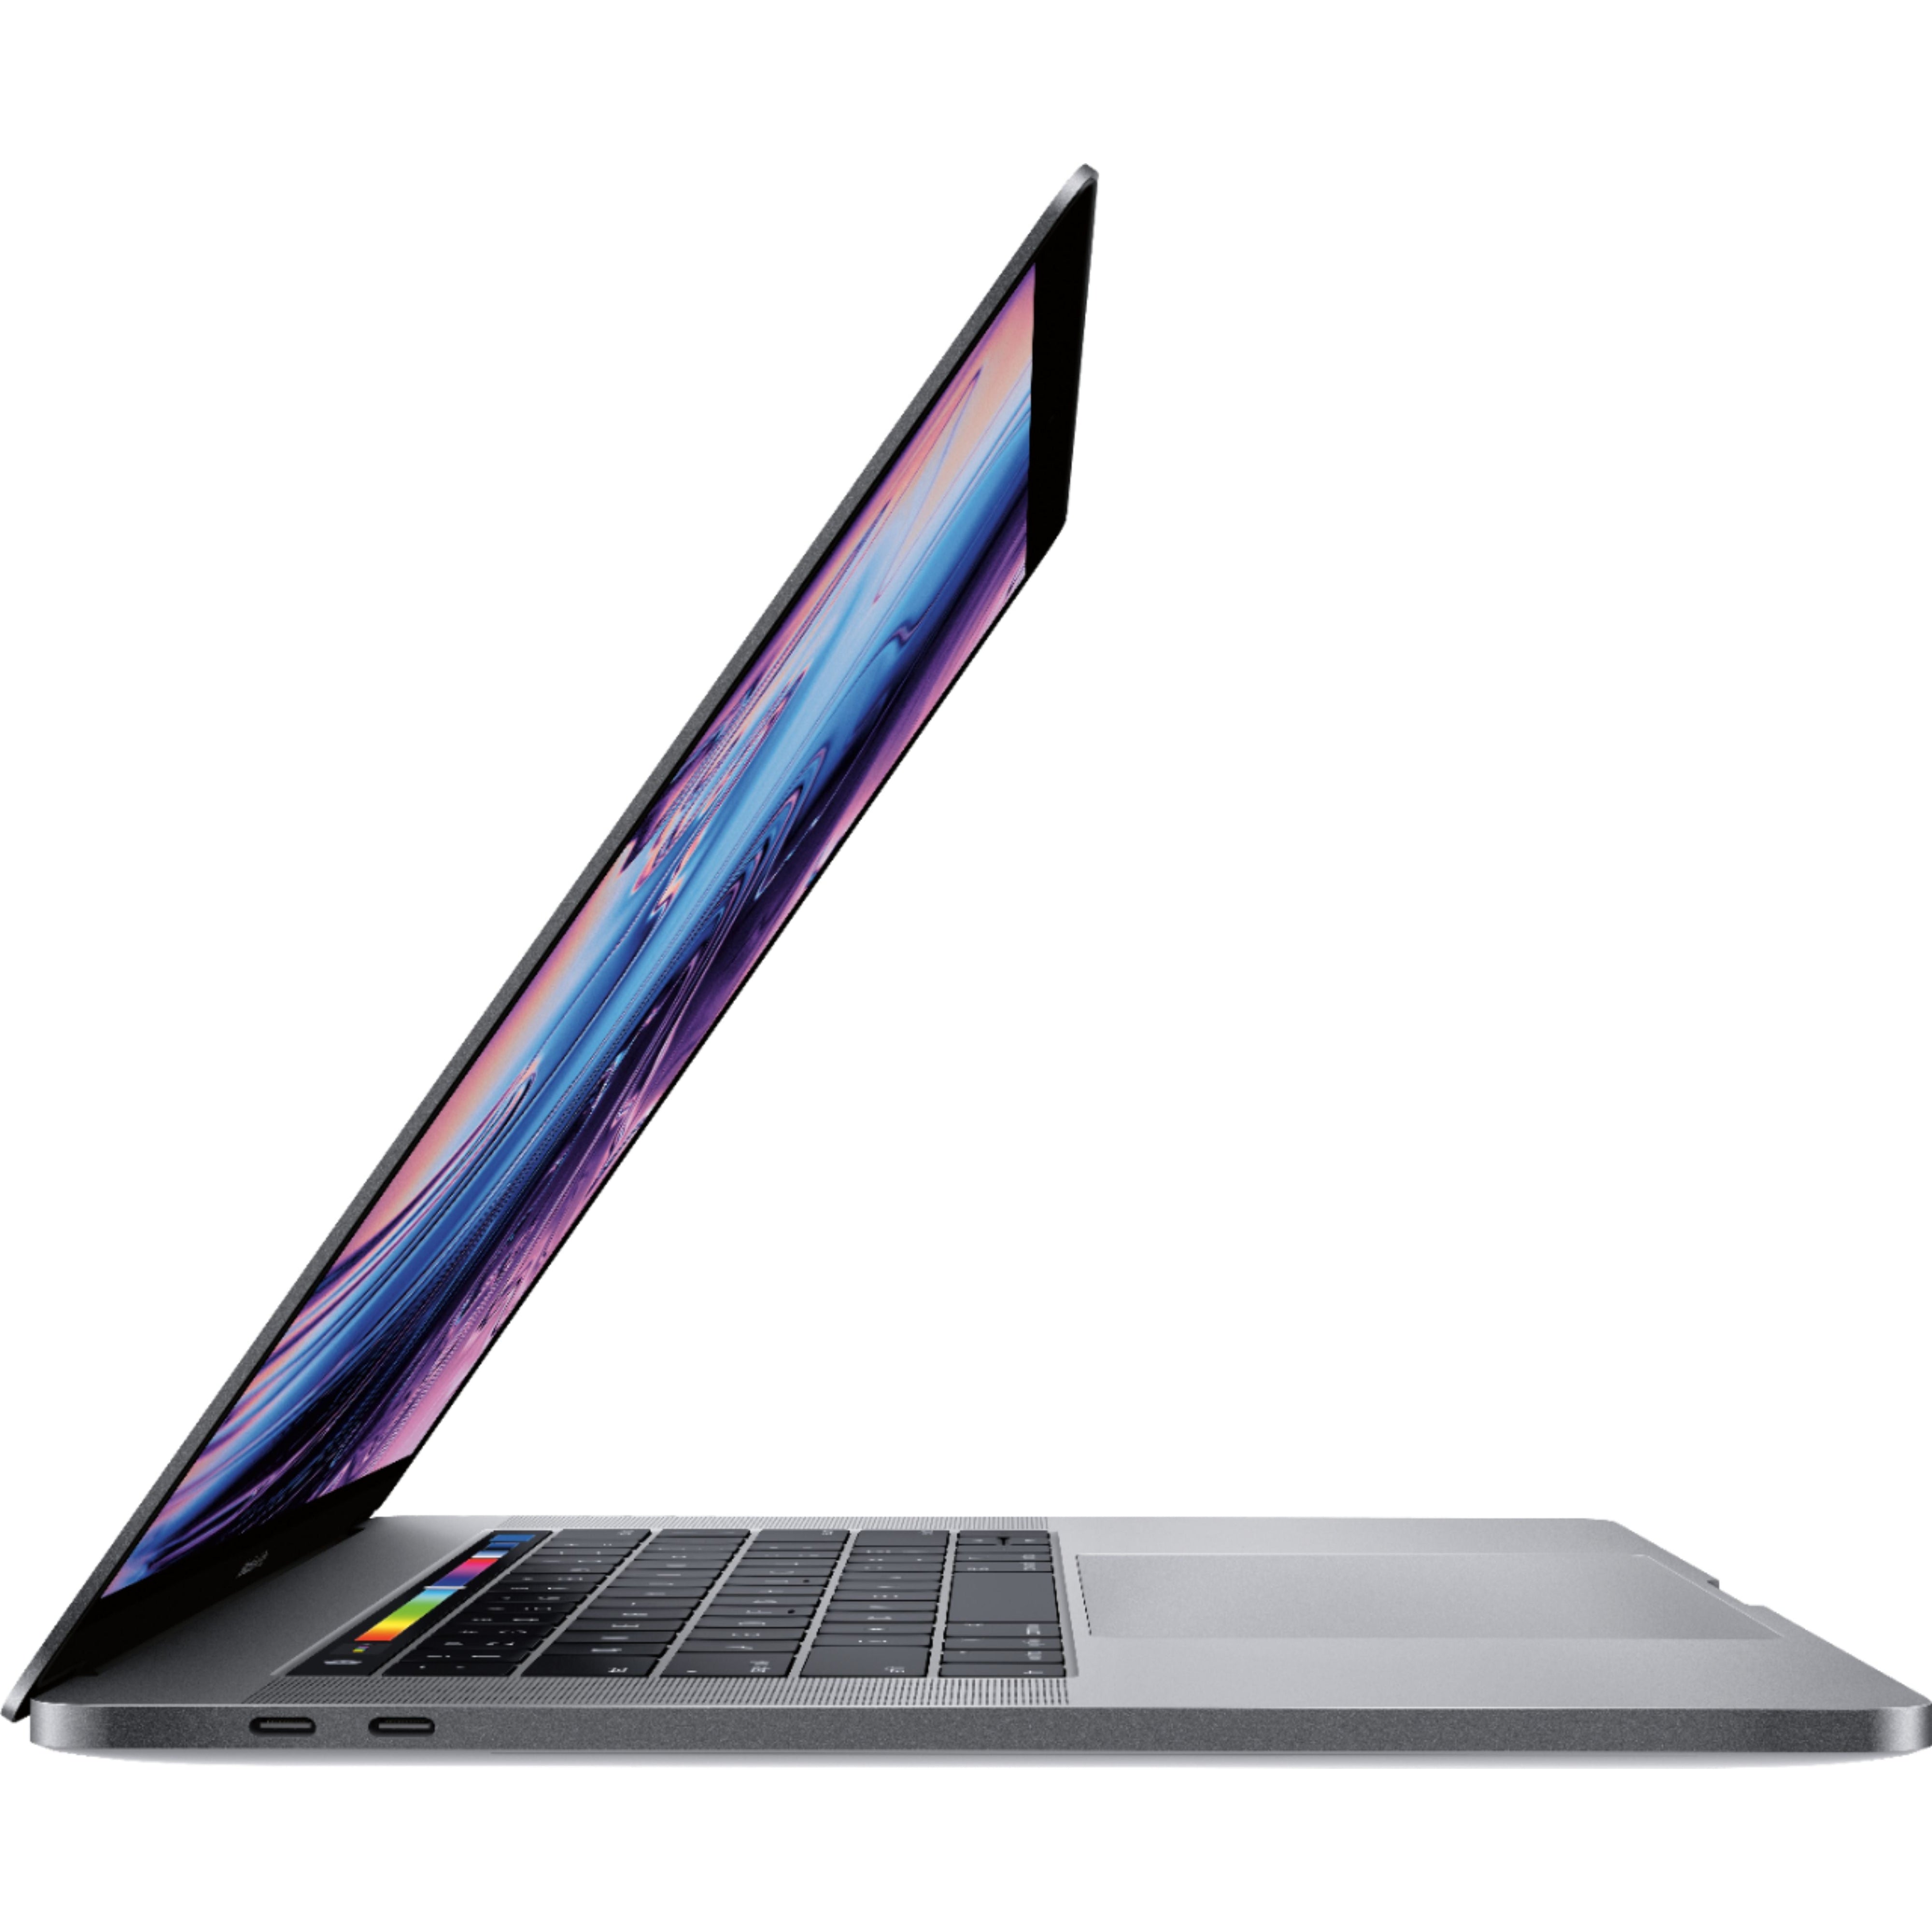 Apple MacBook Pro 15.4'' MV912B/A (2019) Laptop, Intel Core i9, 16GB RAM, 512GB, Space Grey with Touch Bar